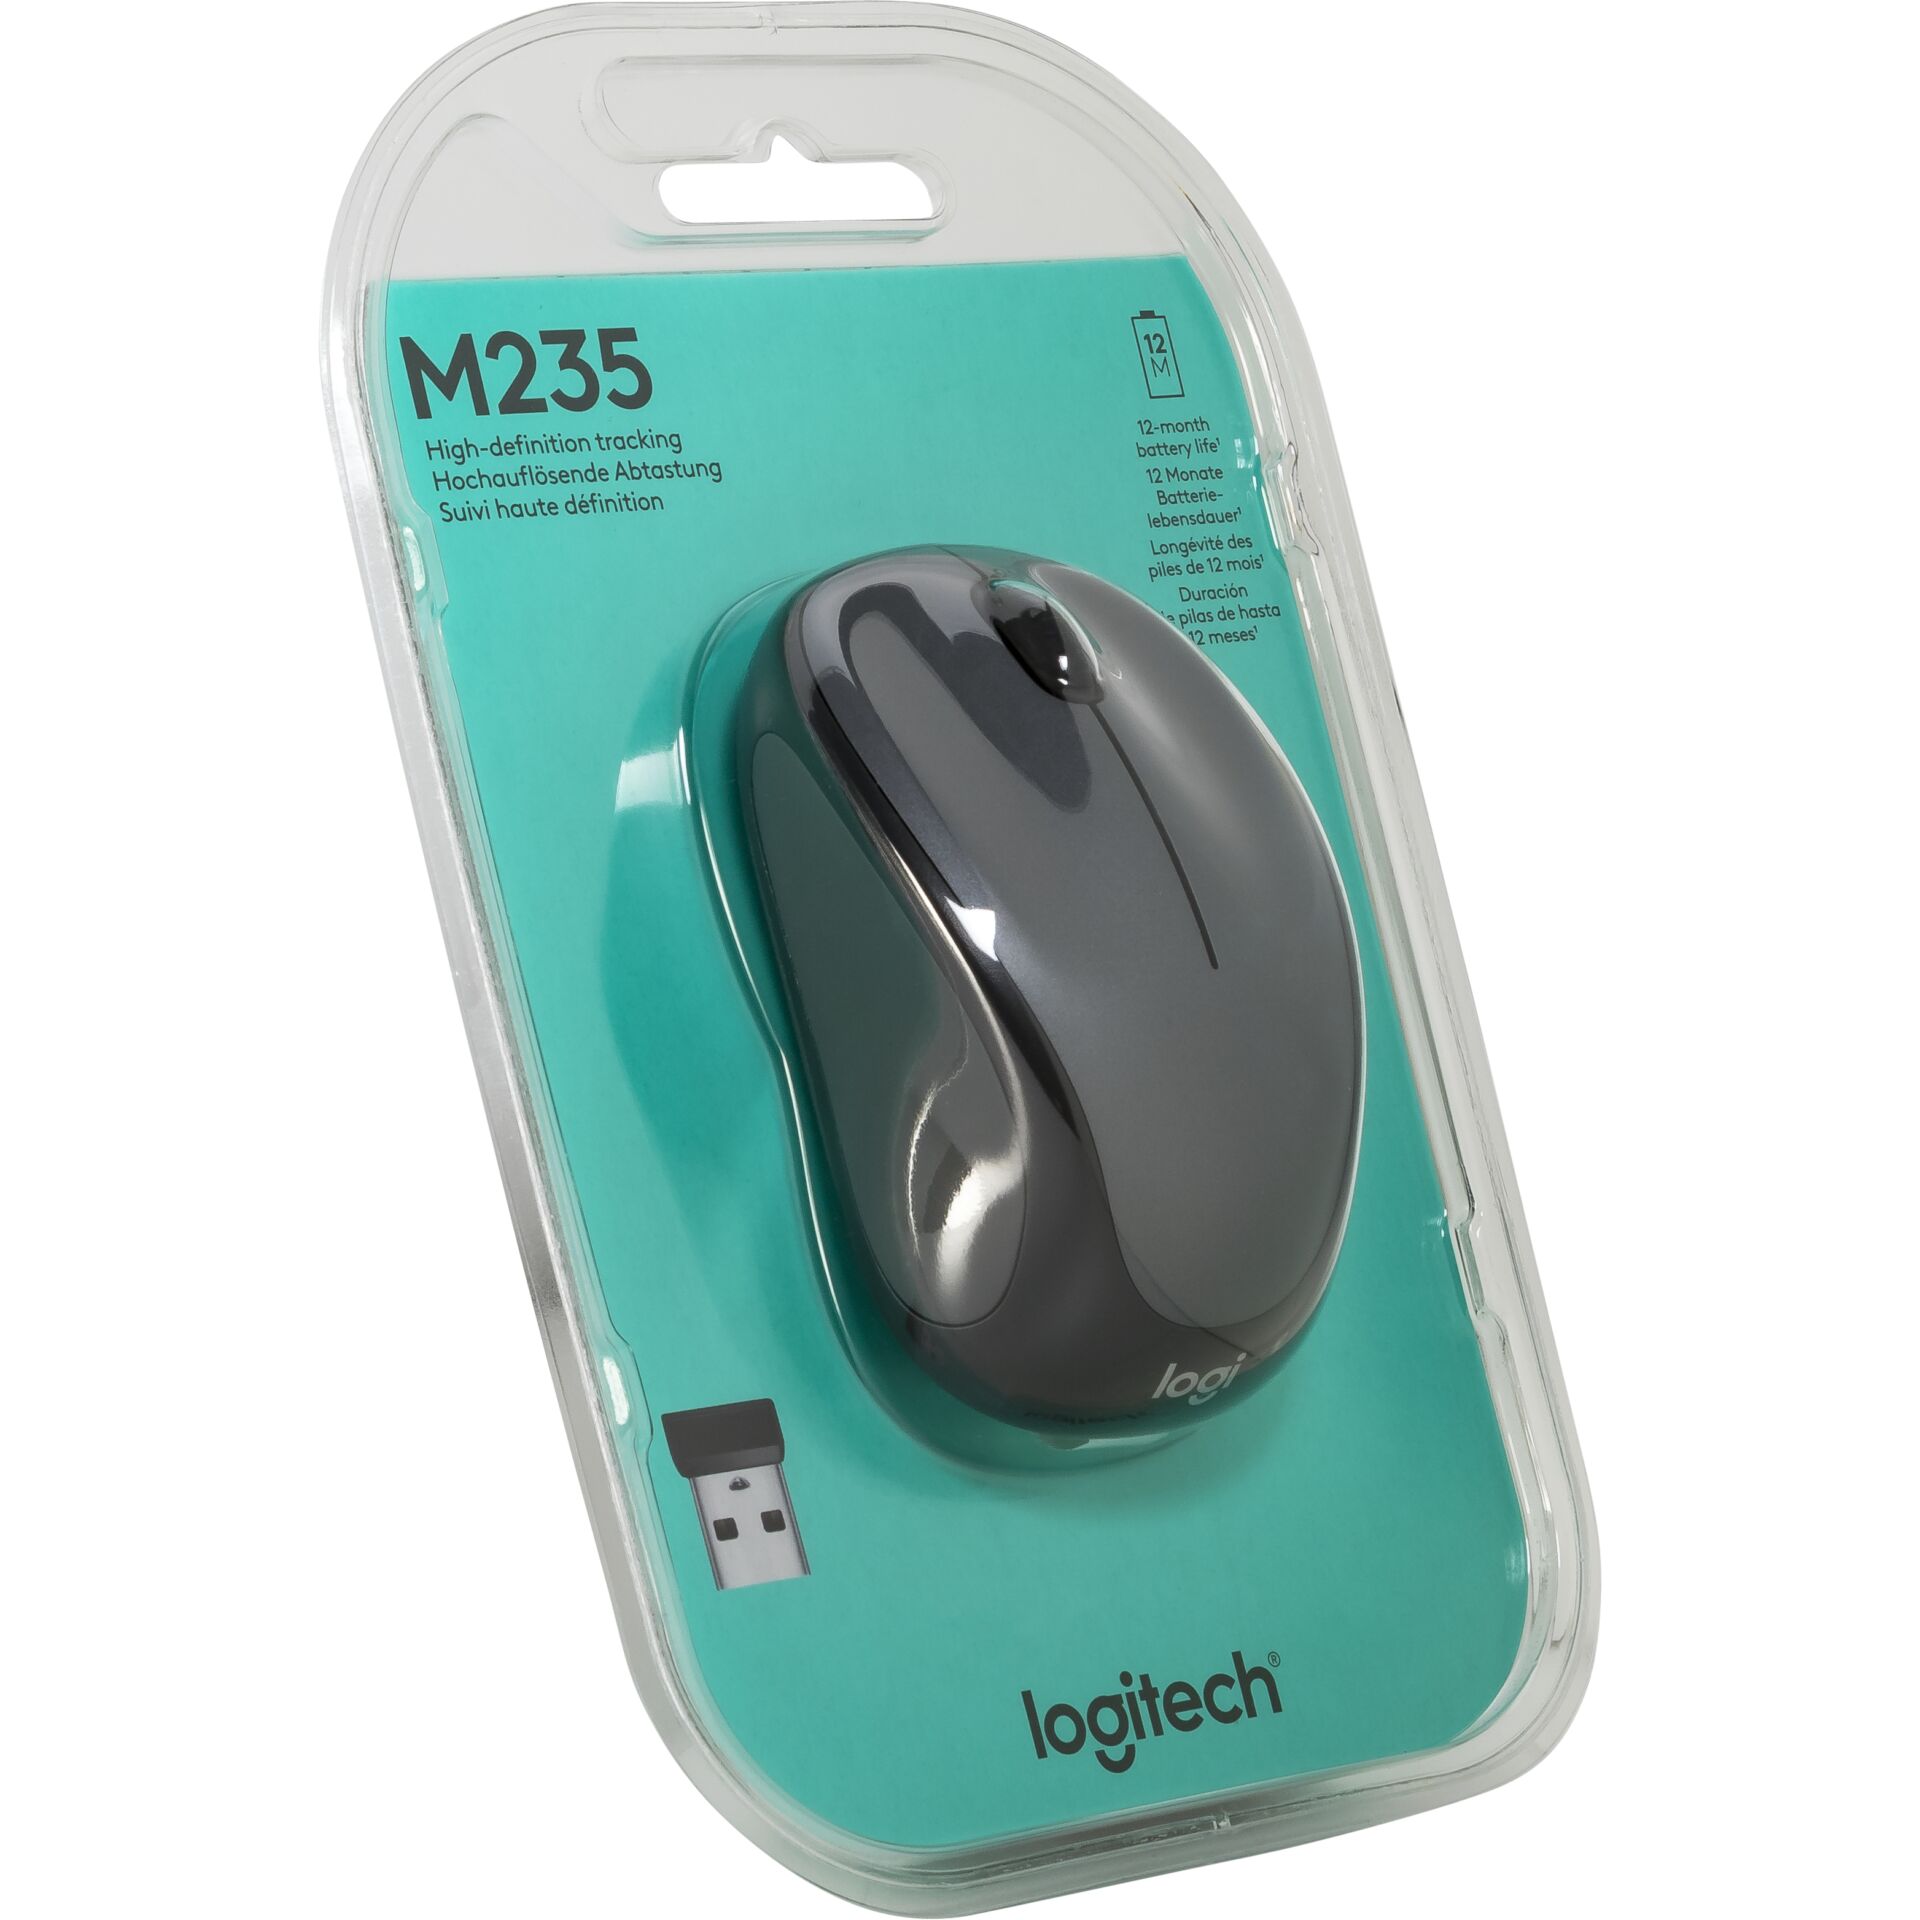 Logitech M235 Wireless Mouse grau/schwarz, USB 